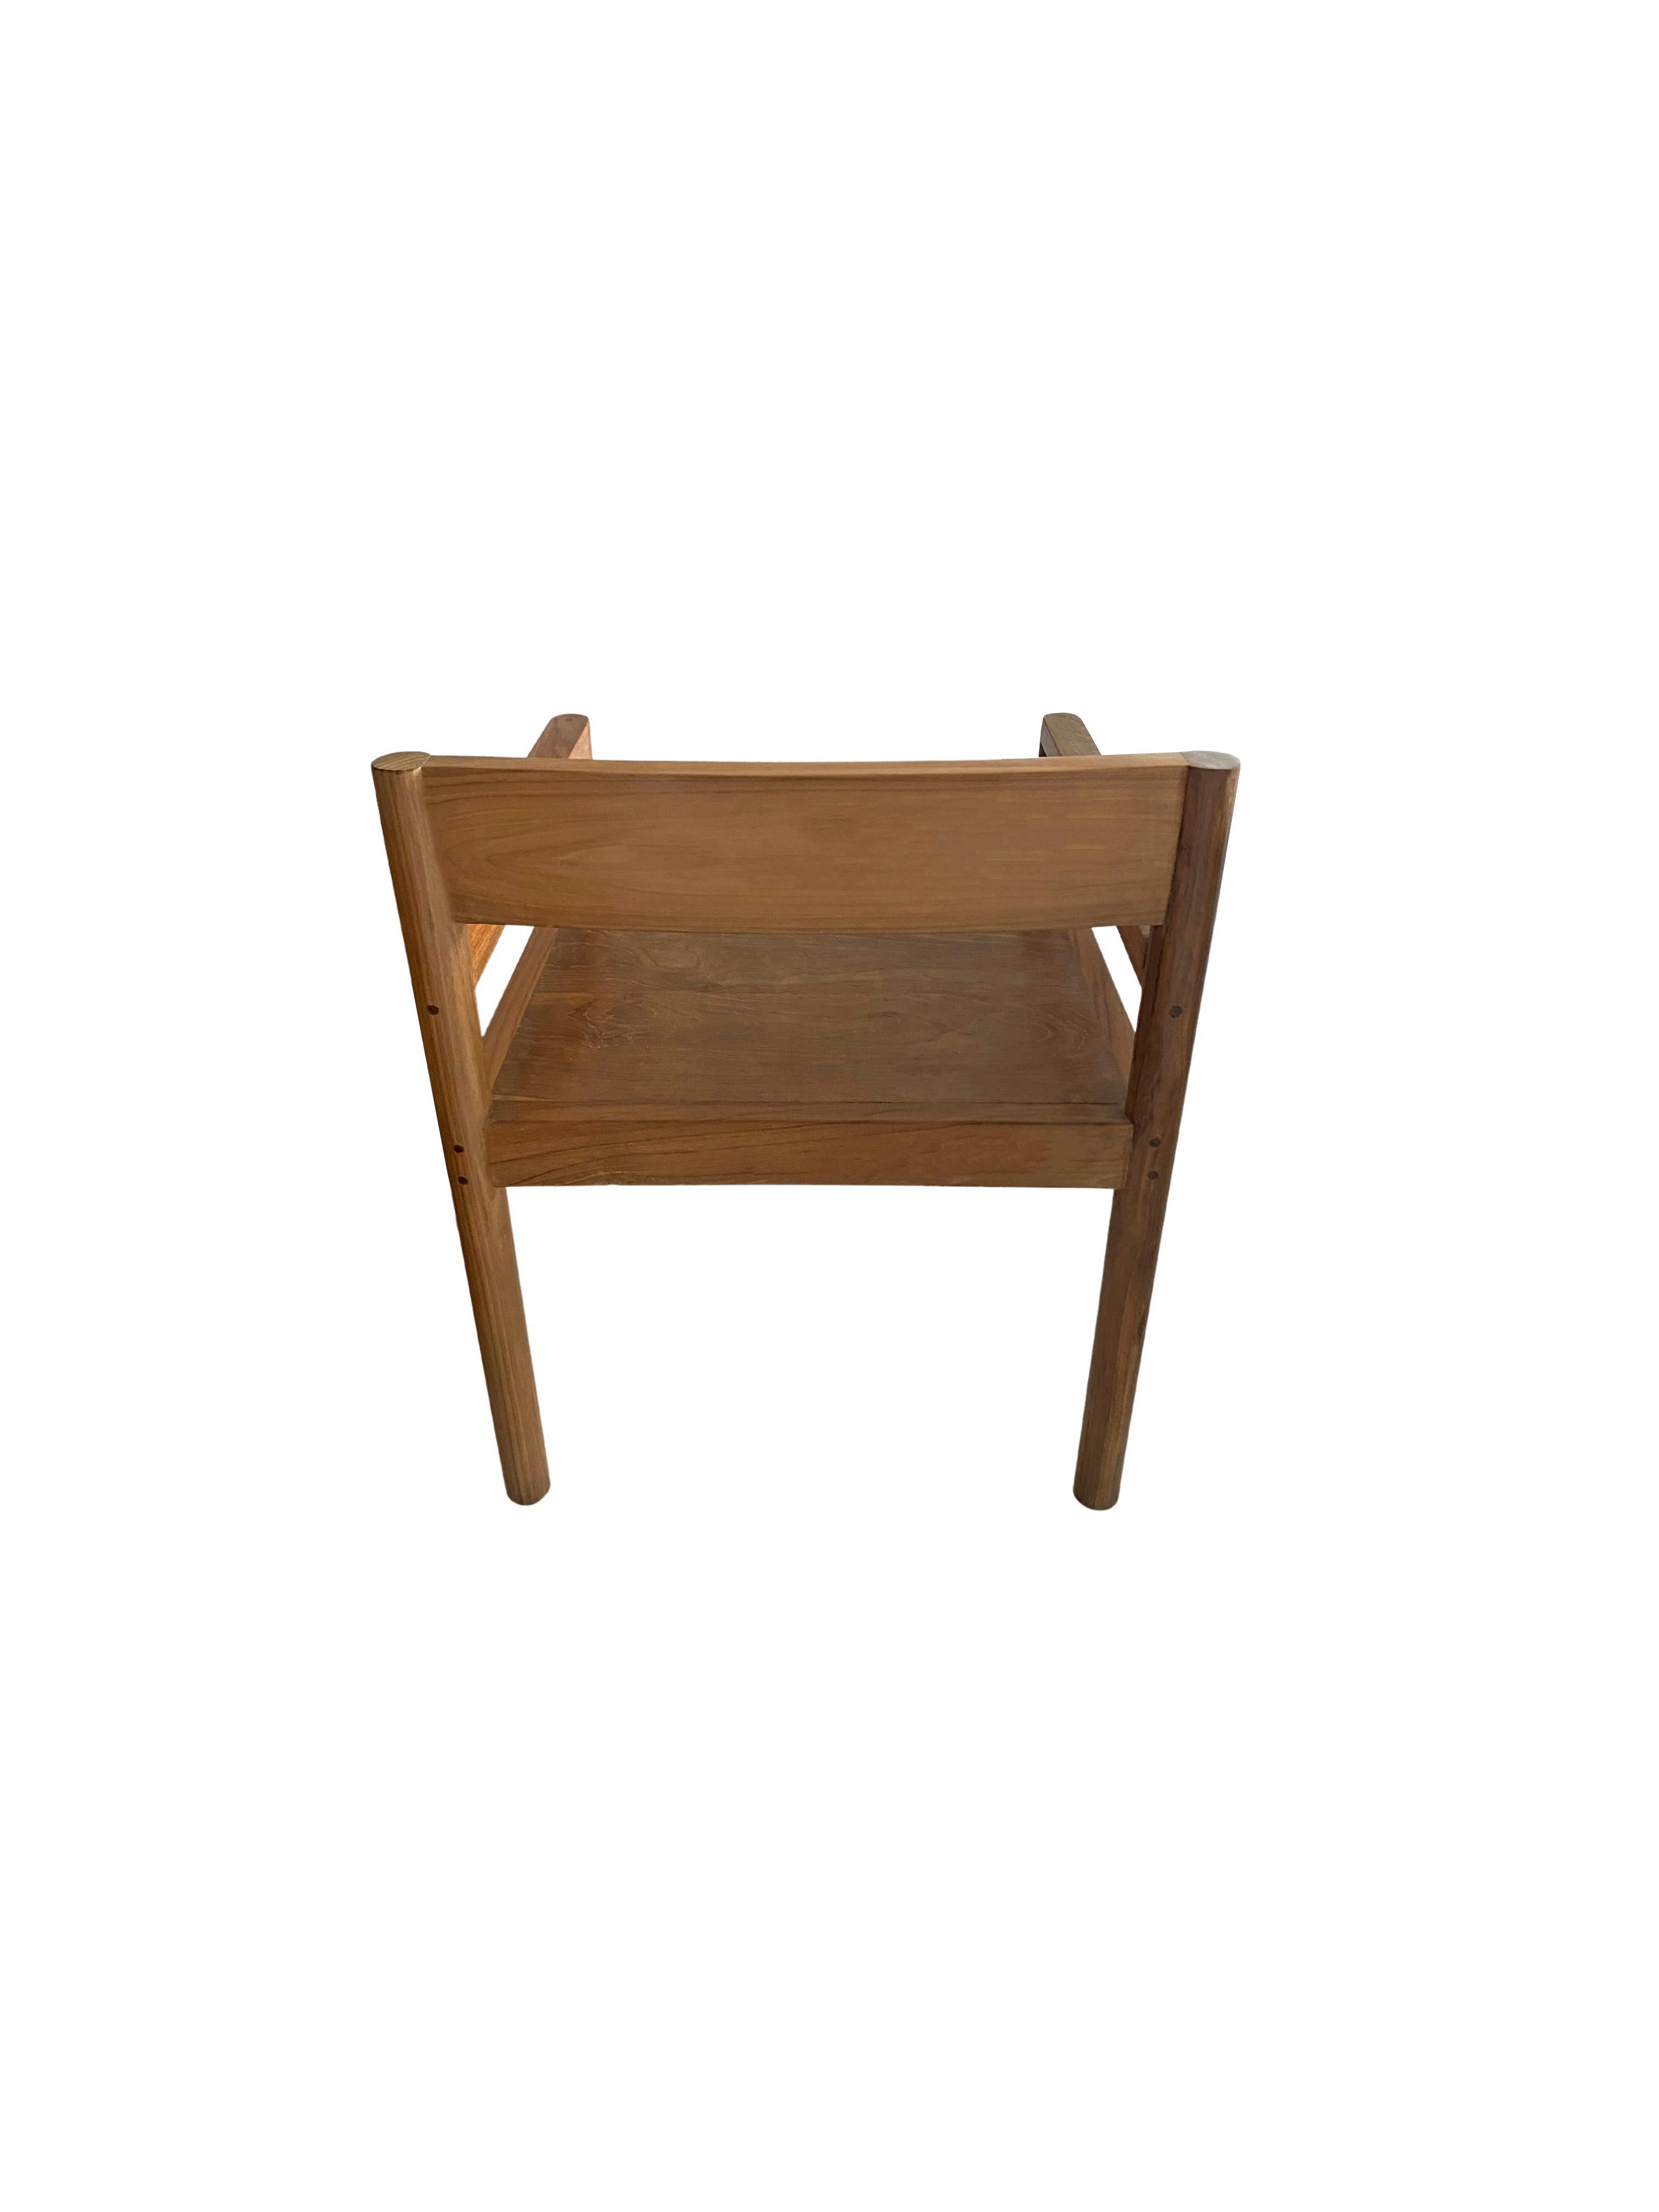 Modern Teak Wood Chair With stunning Wood Pattern Detailing 2